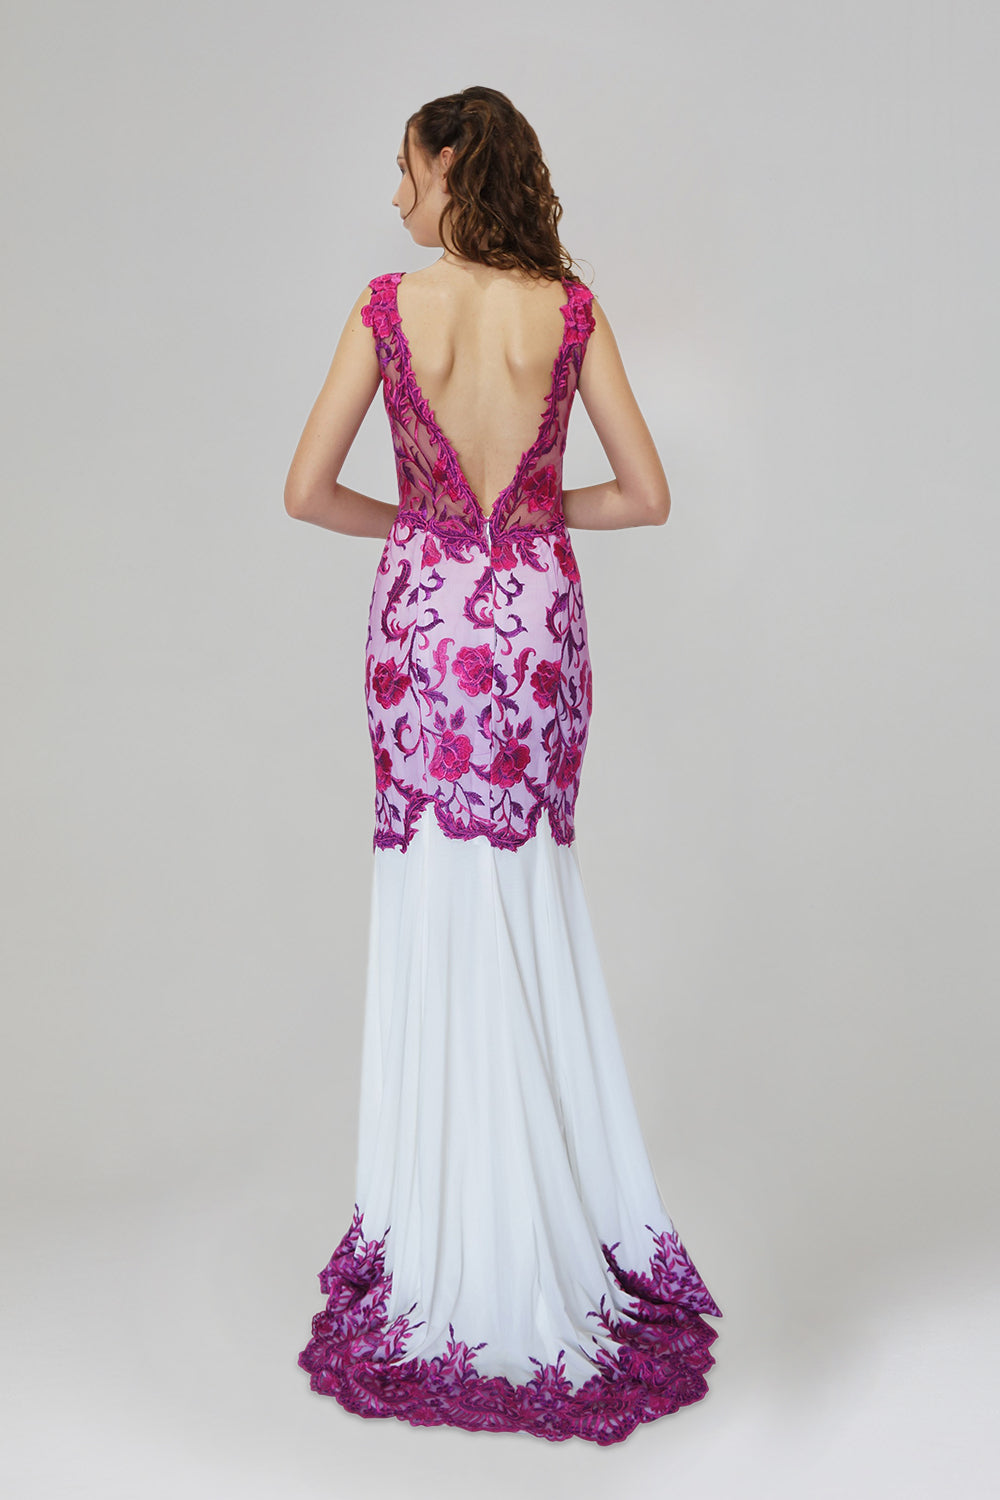 custom hot pink ball gowns perth australia envious bridal & formal